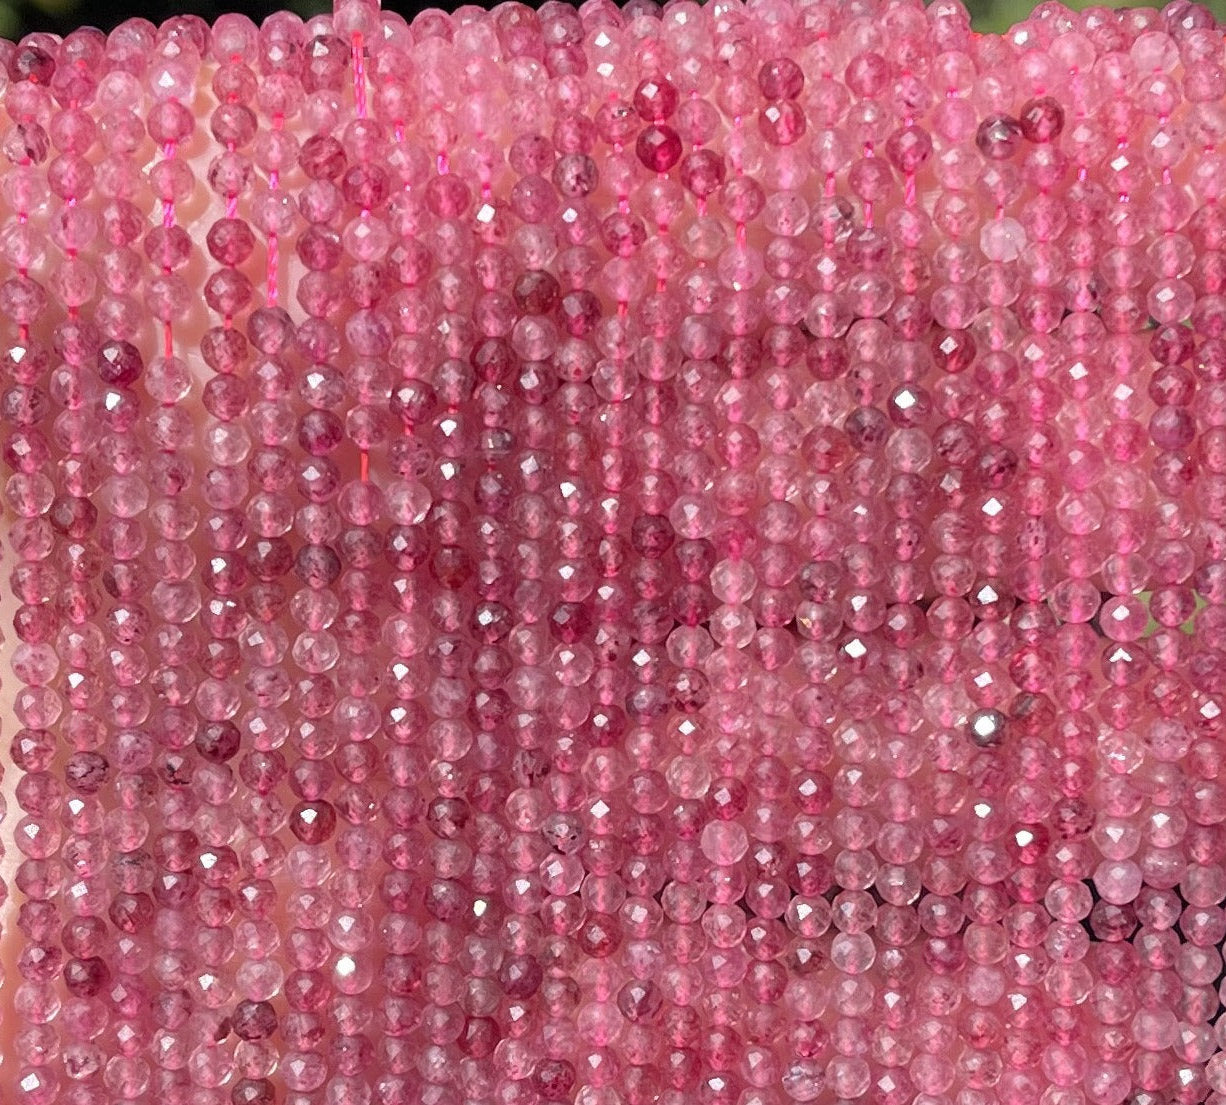 Strawberry Quartz 3mm faceted round natural gemstone beads 15.5" strand